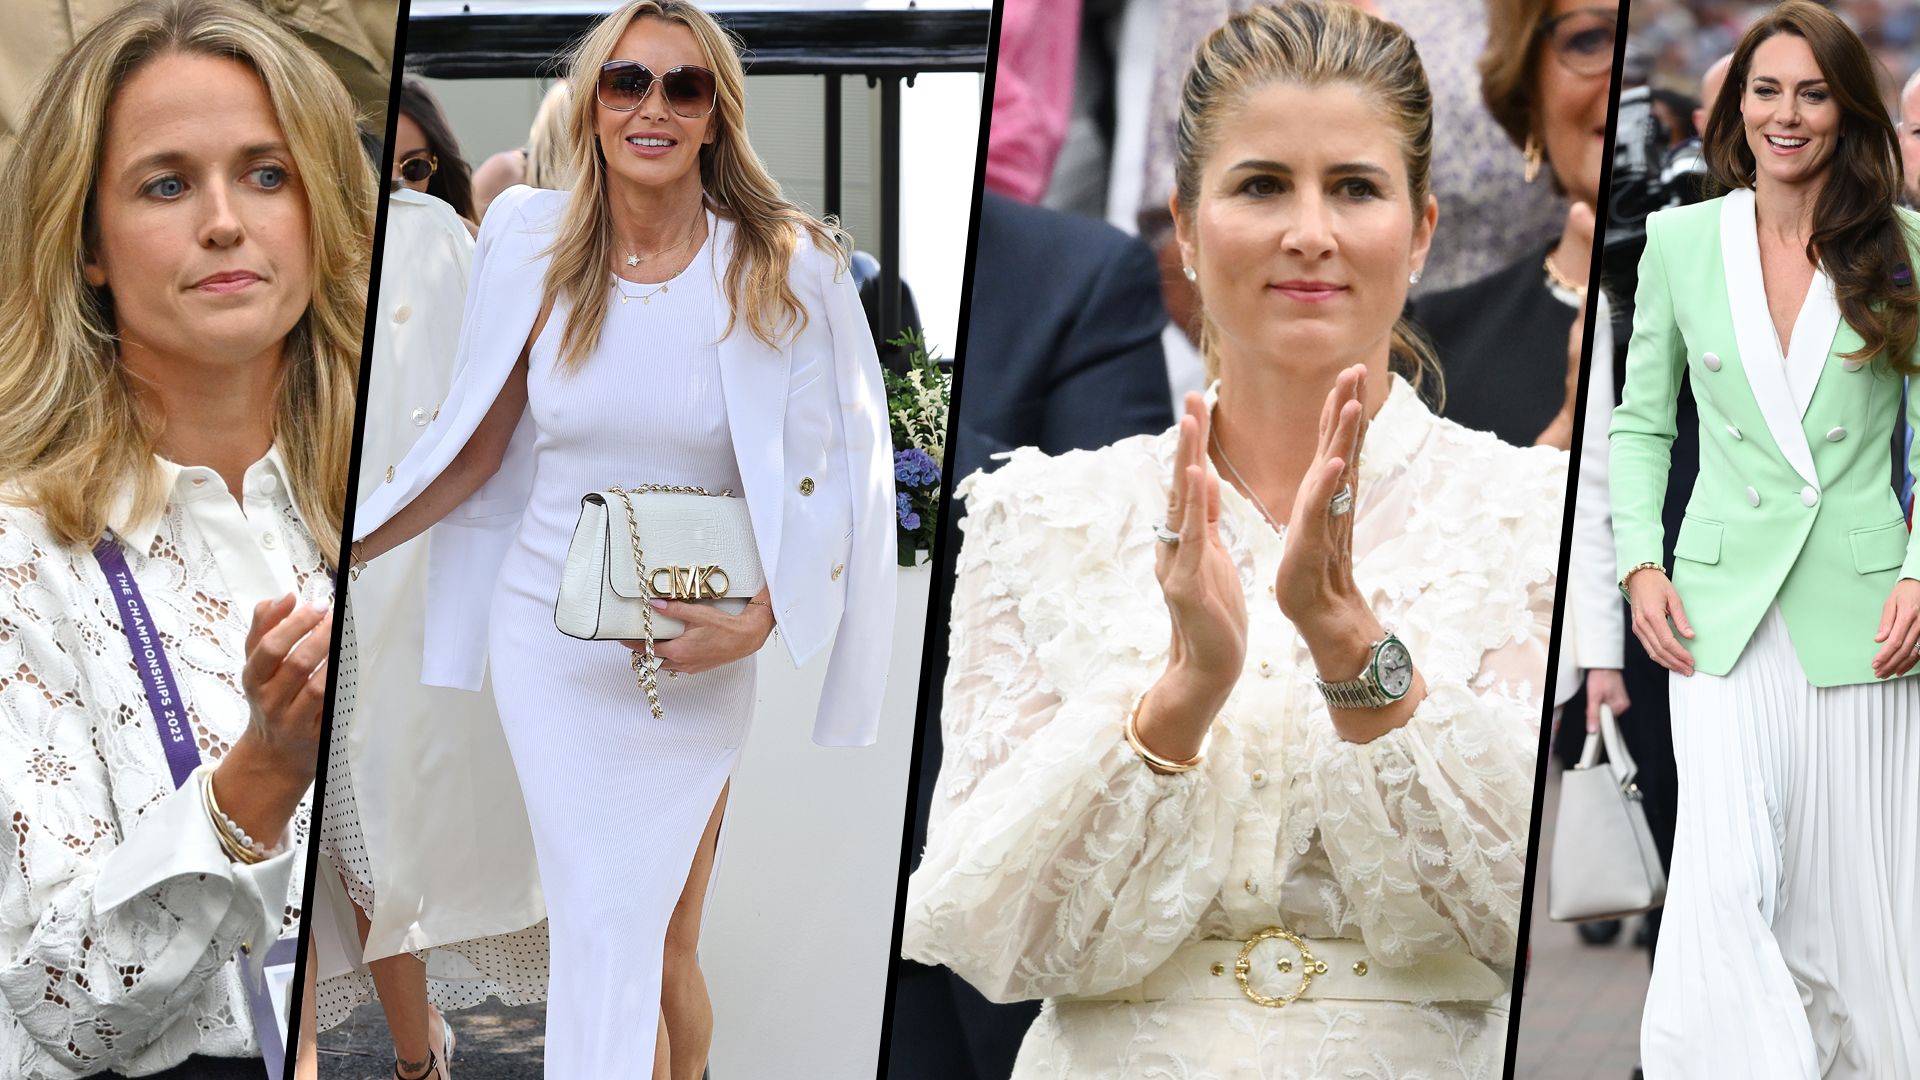 Kim Murray, Amanda Holden, Mirka Federer and Kate Middleton in bridal white dresses at Wimbledon